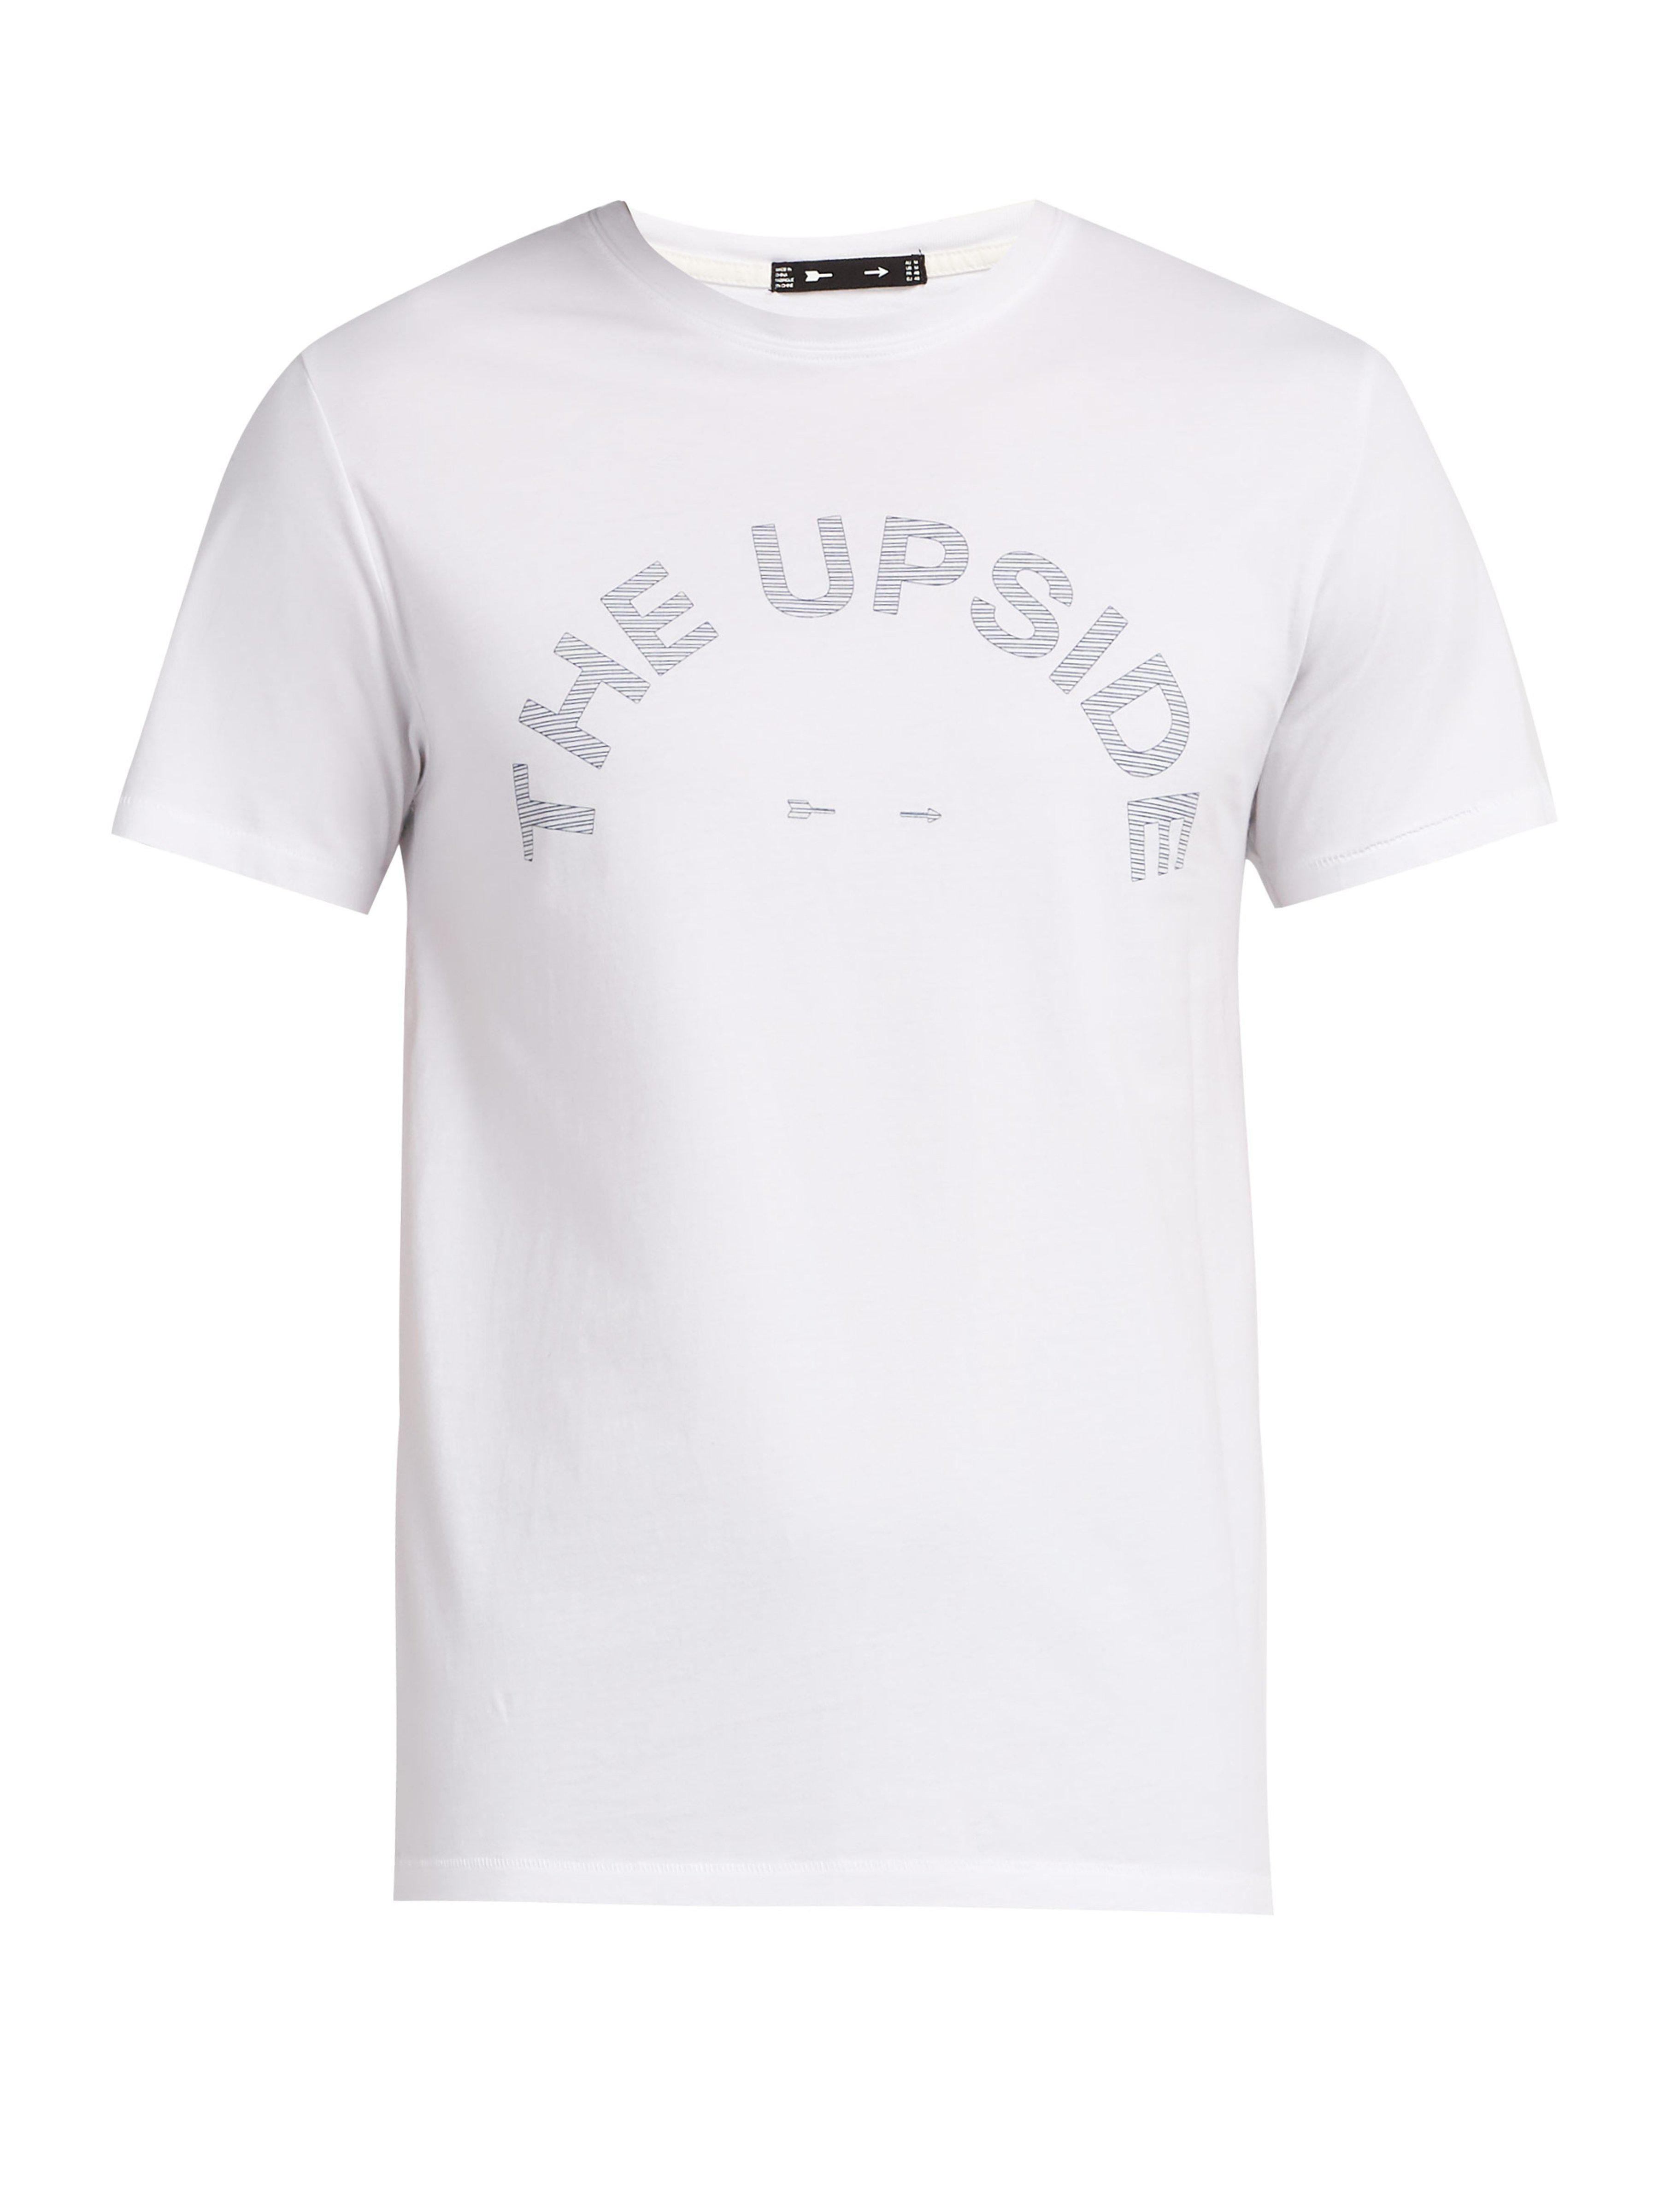 White Horseshoe Logo - The Upside Newman Horseshoe Logo T Shirt in White for Men - Lyst